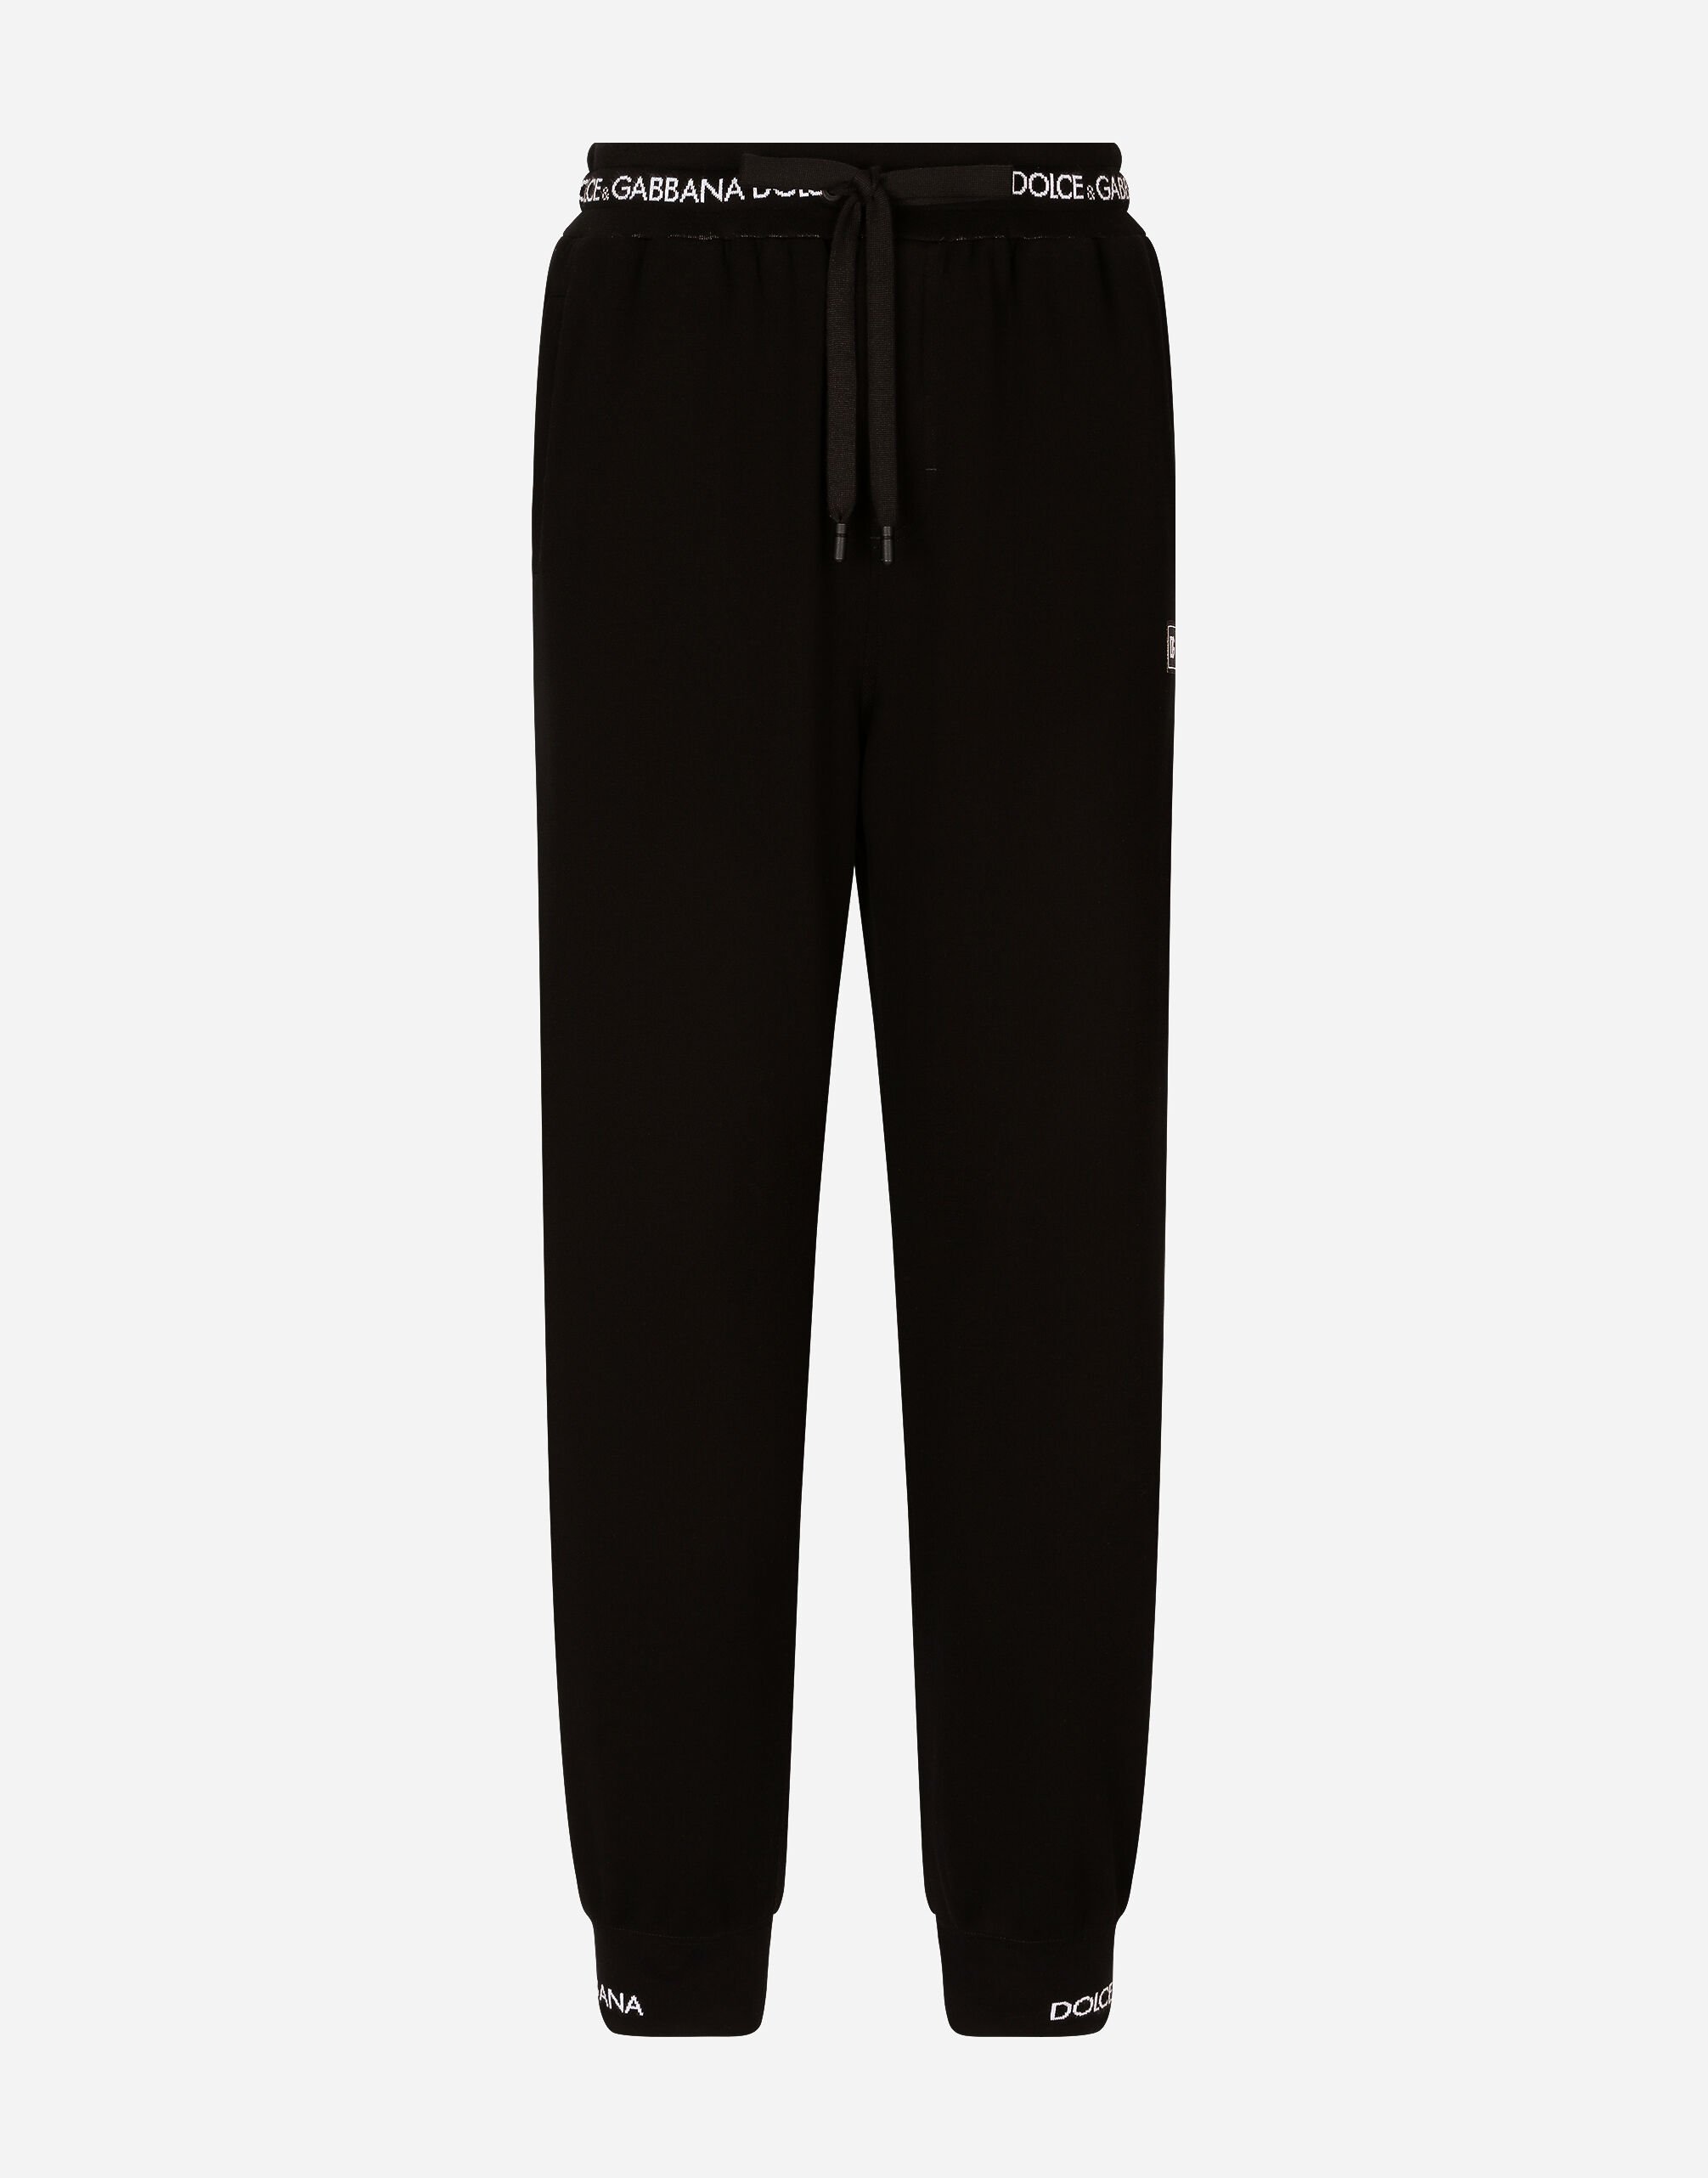 Dolce & Gabbana Cotton jogging pants with logo print Print GVUZATHI7X6